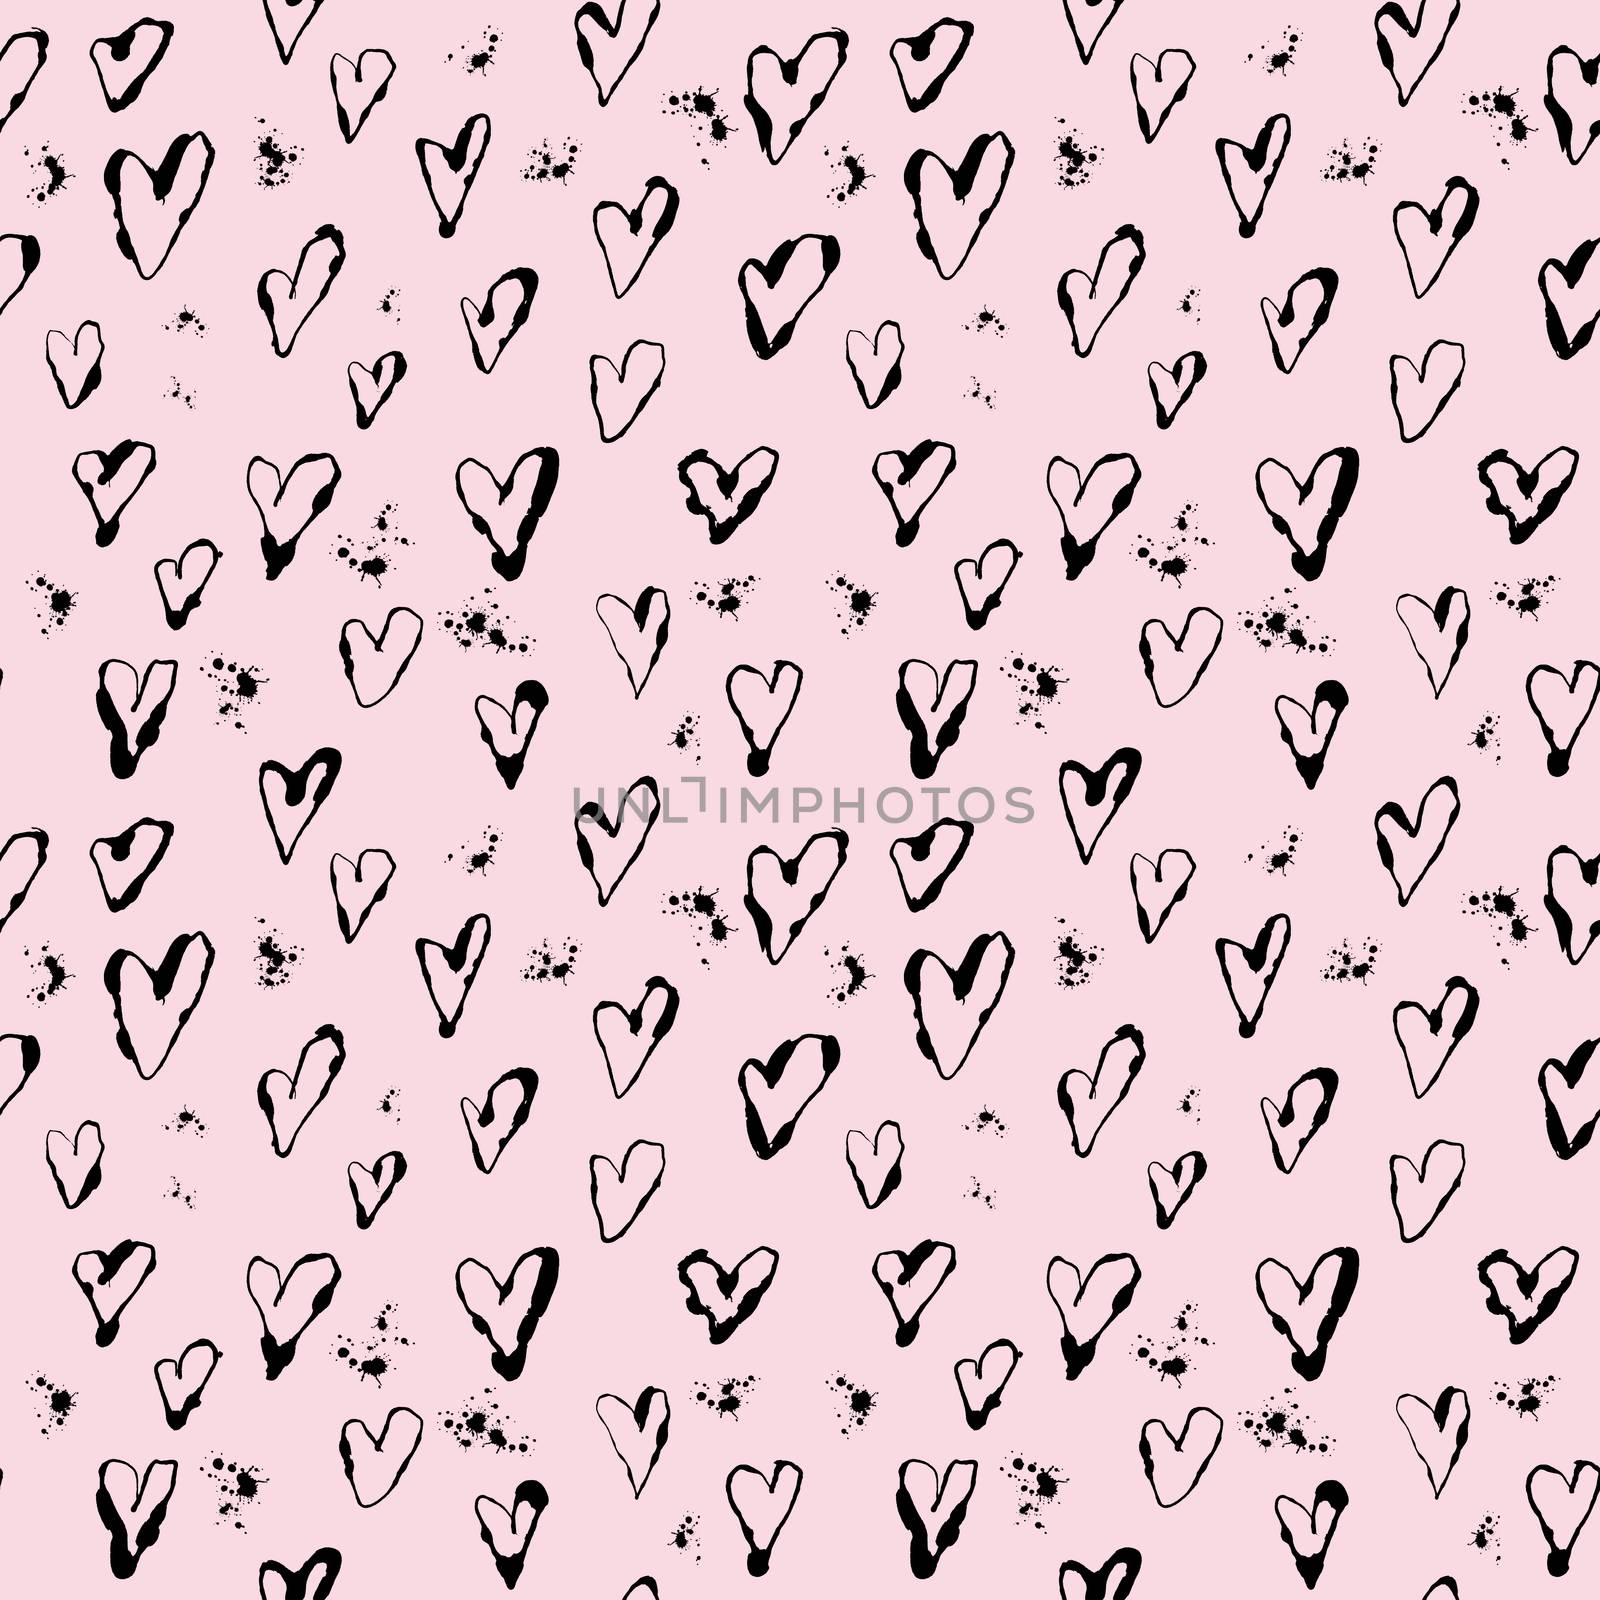 Ink texture hearts seamless pattern. Black design on pink background. by Nata_Prando